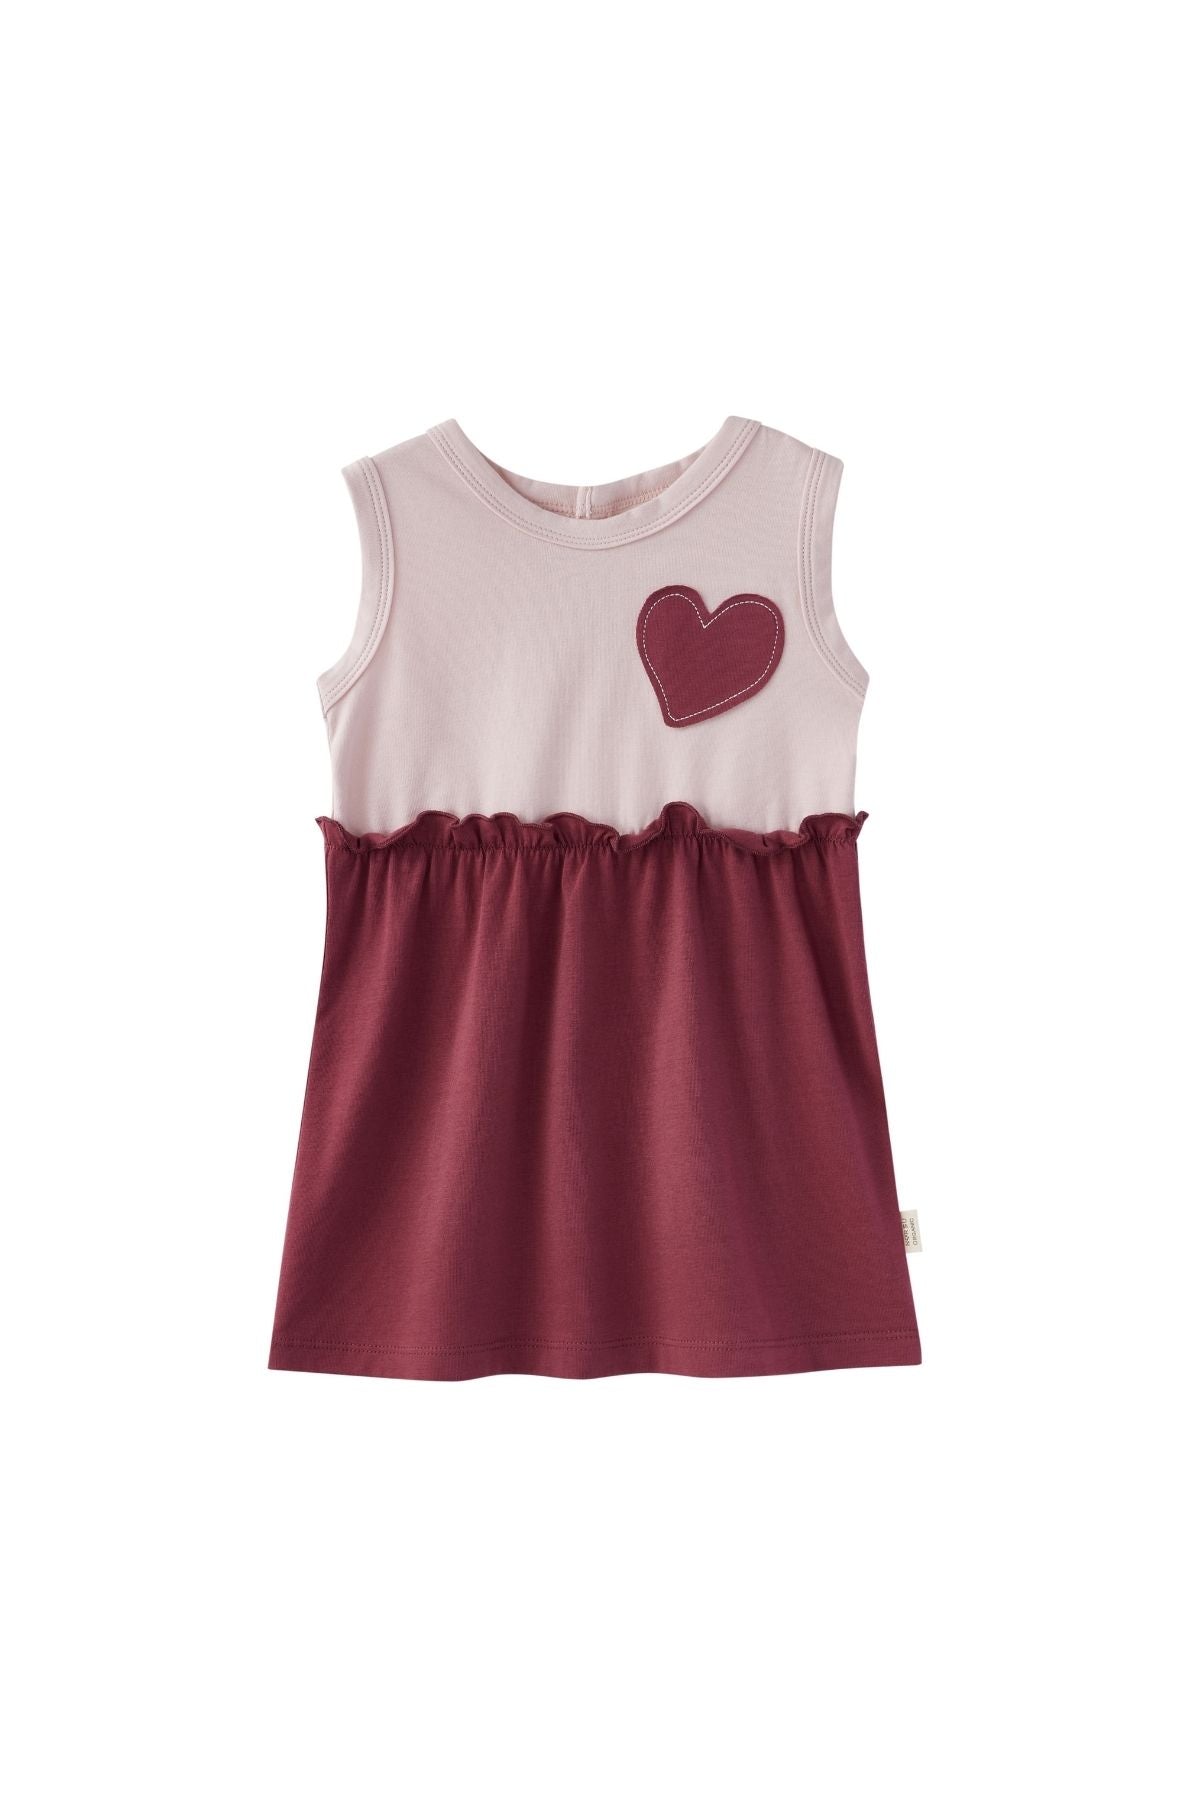 image for Girl Organic Tank-top Dress-Pinky Heart